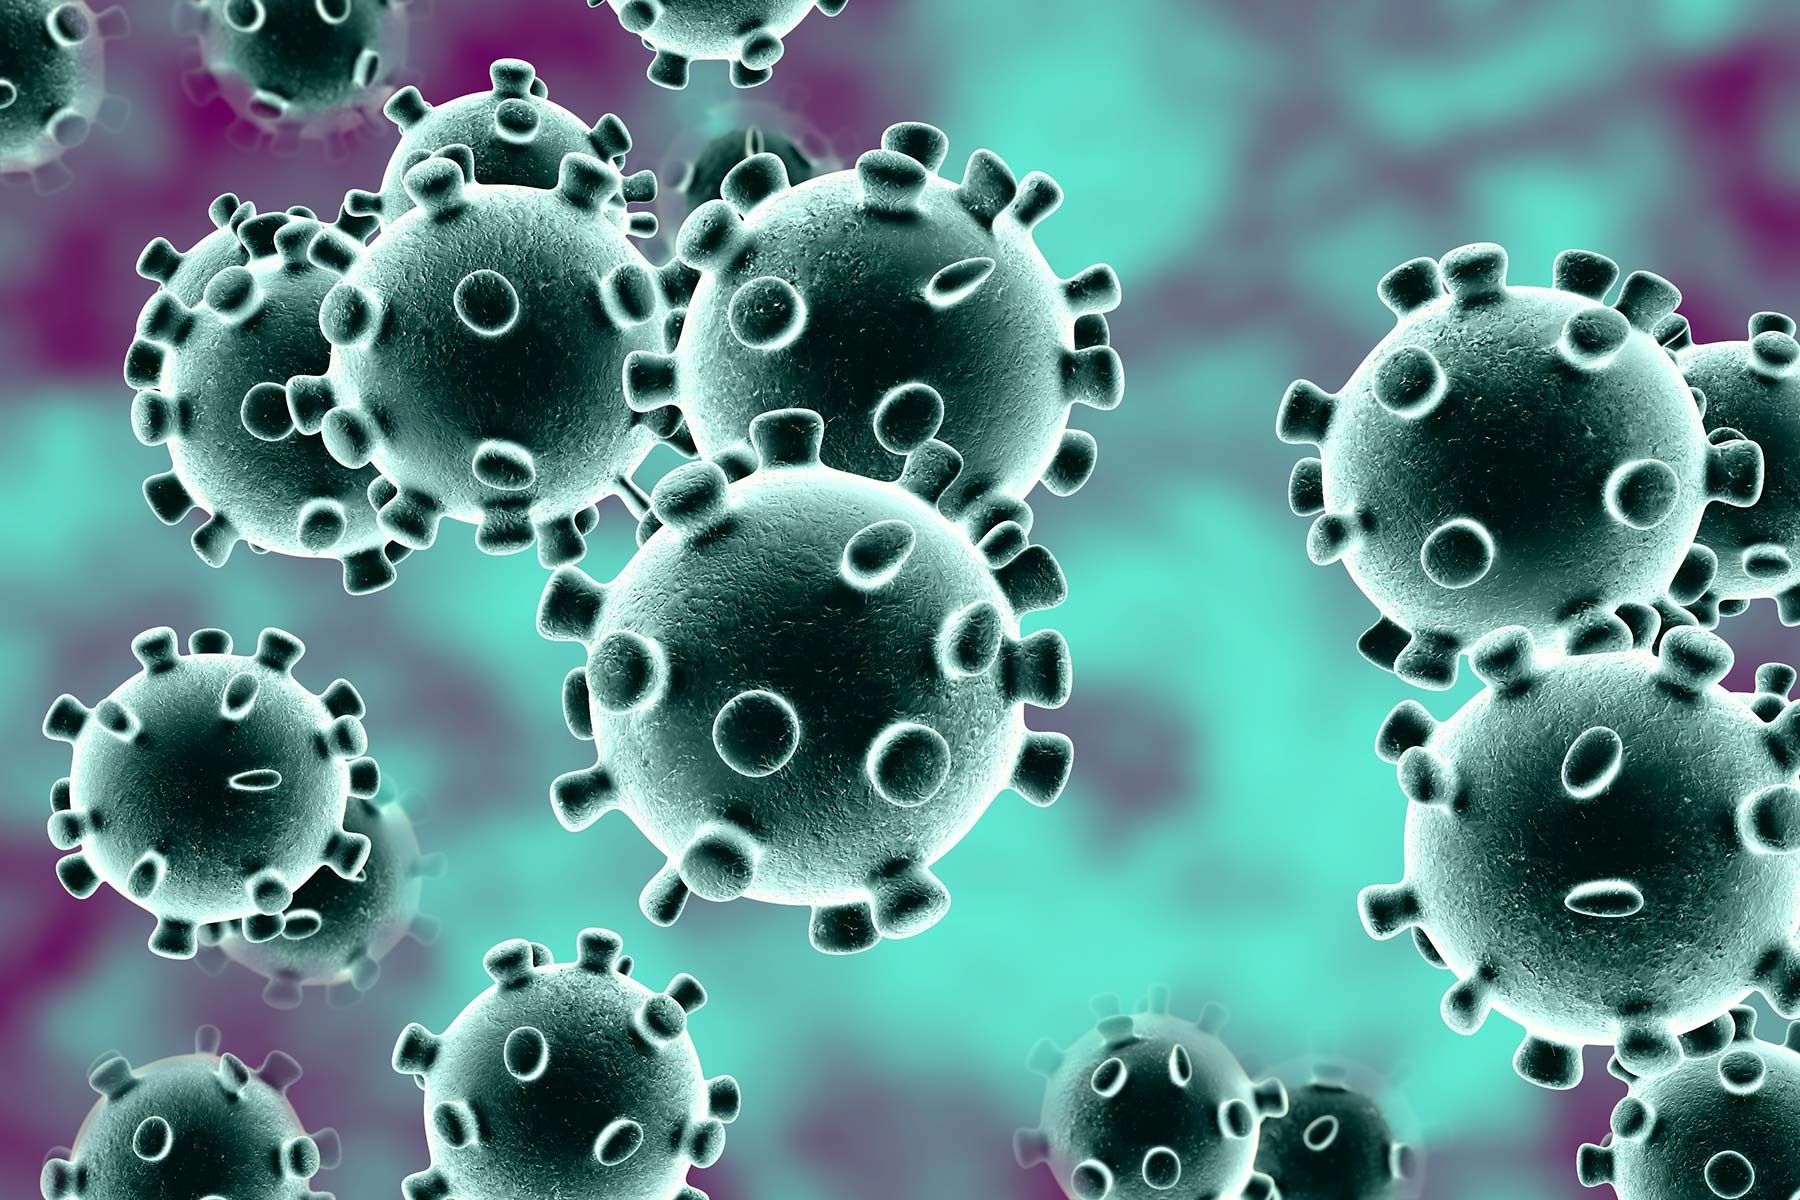 Special Article On Vorona Virus in Lancet Journal